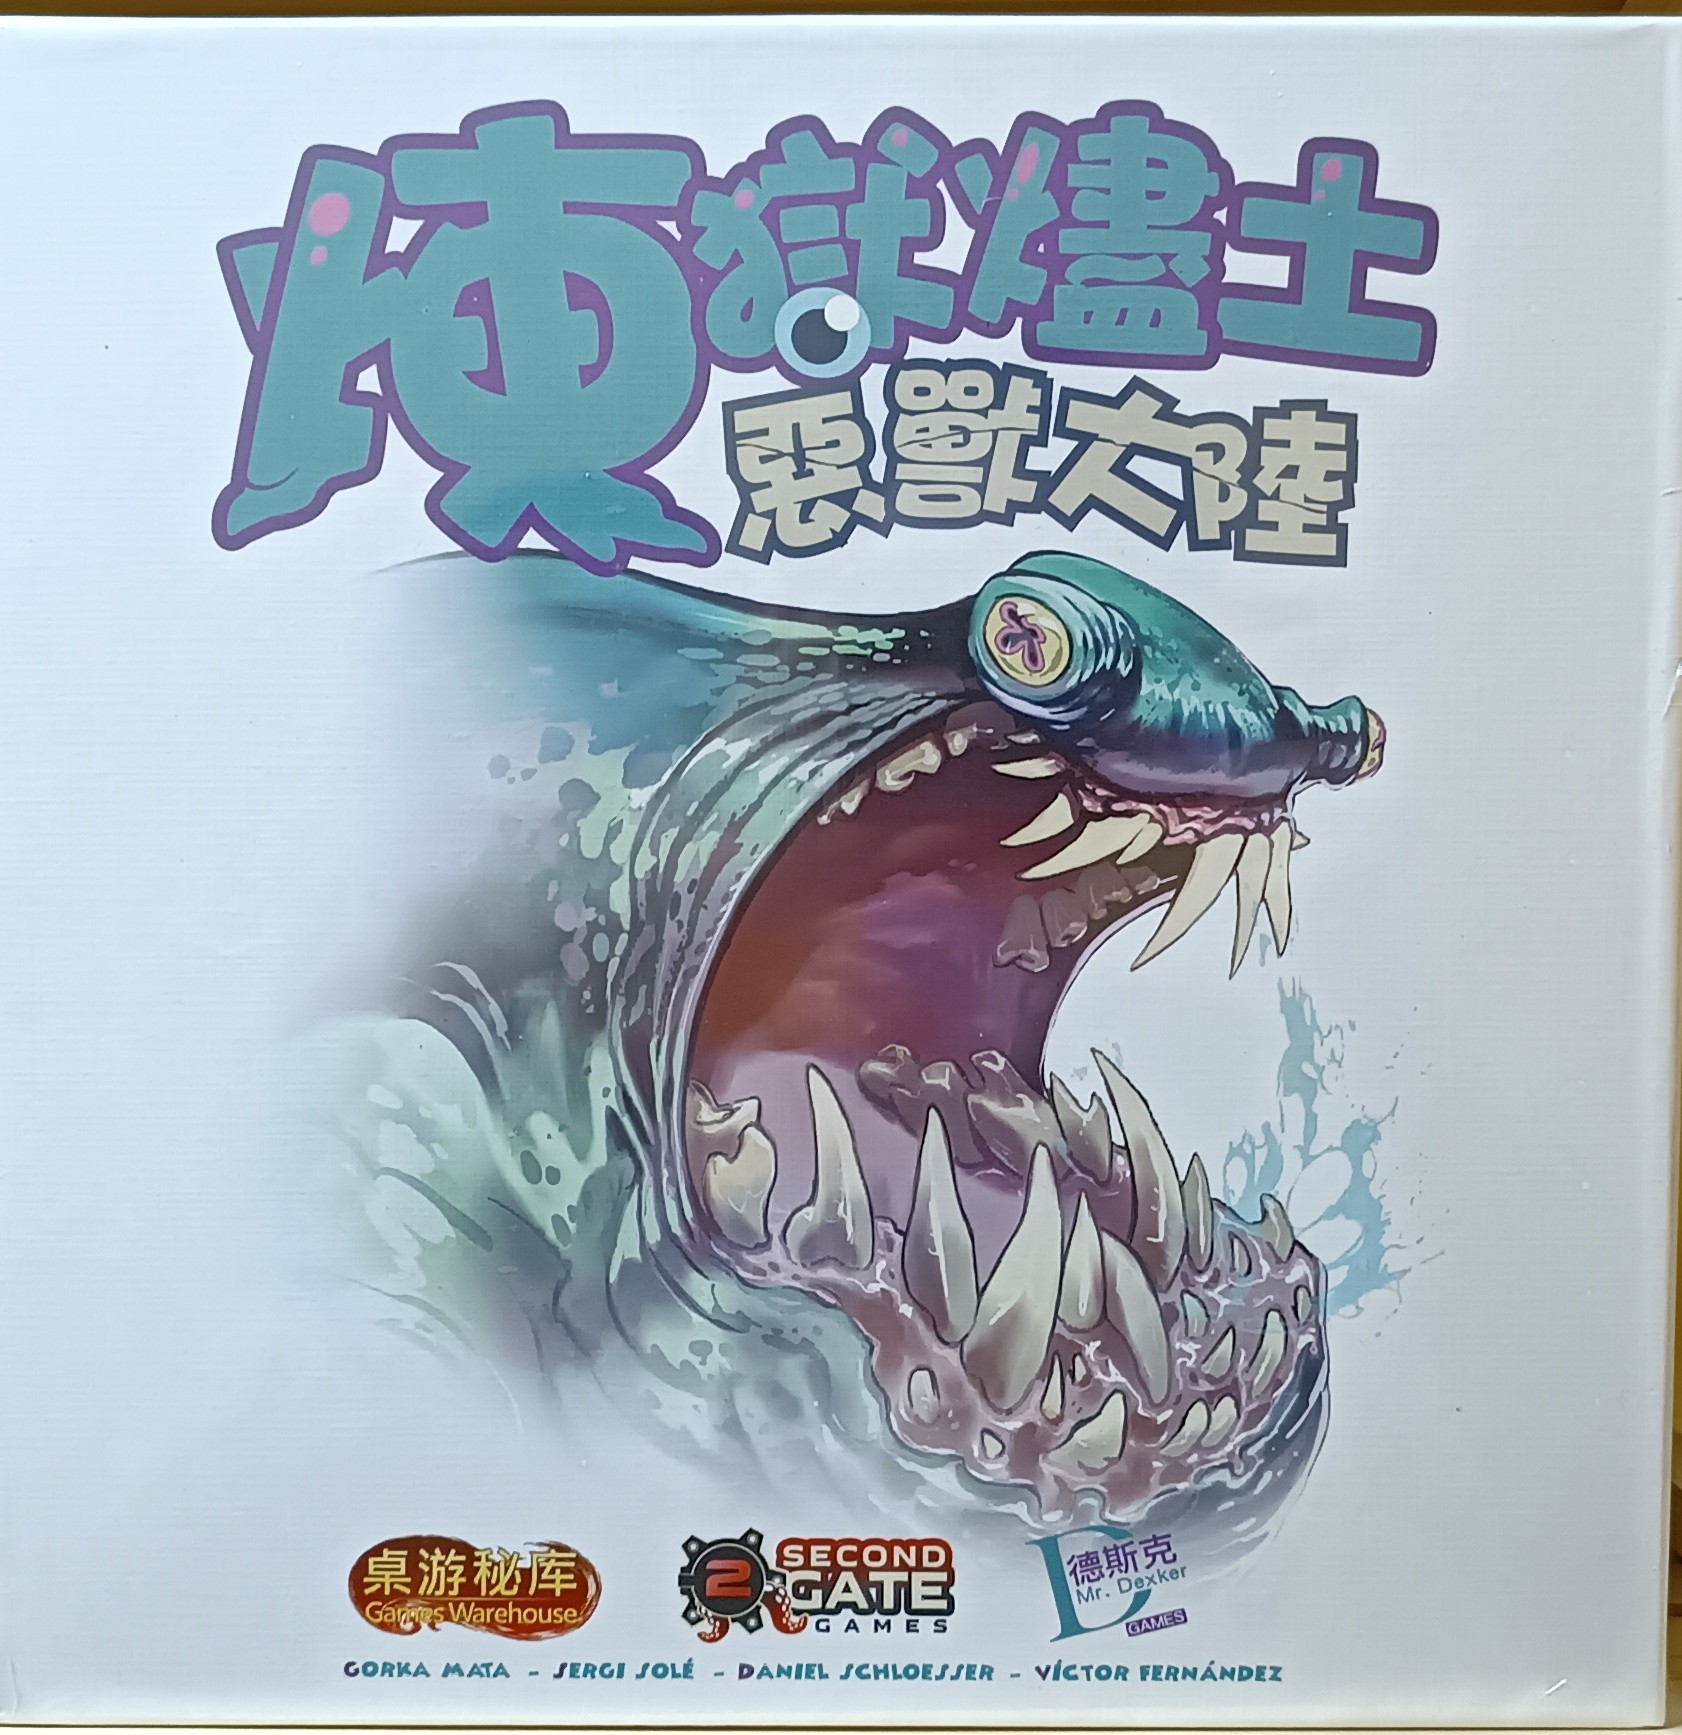 Настольная игра Second Gate Games Monster Lands Retail version на английском языке настольная игра floodgate games sagrada artisans standard edition на английском языке